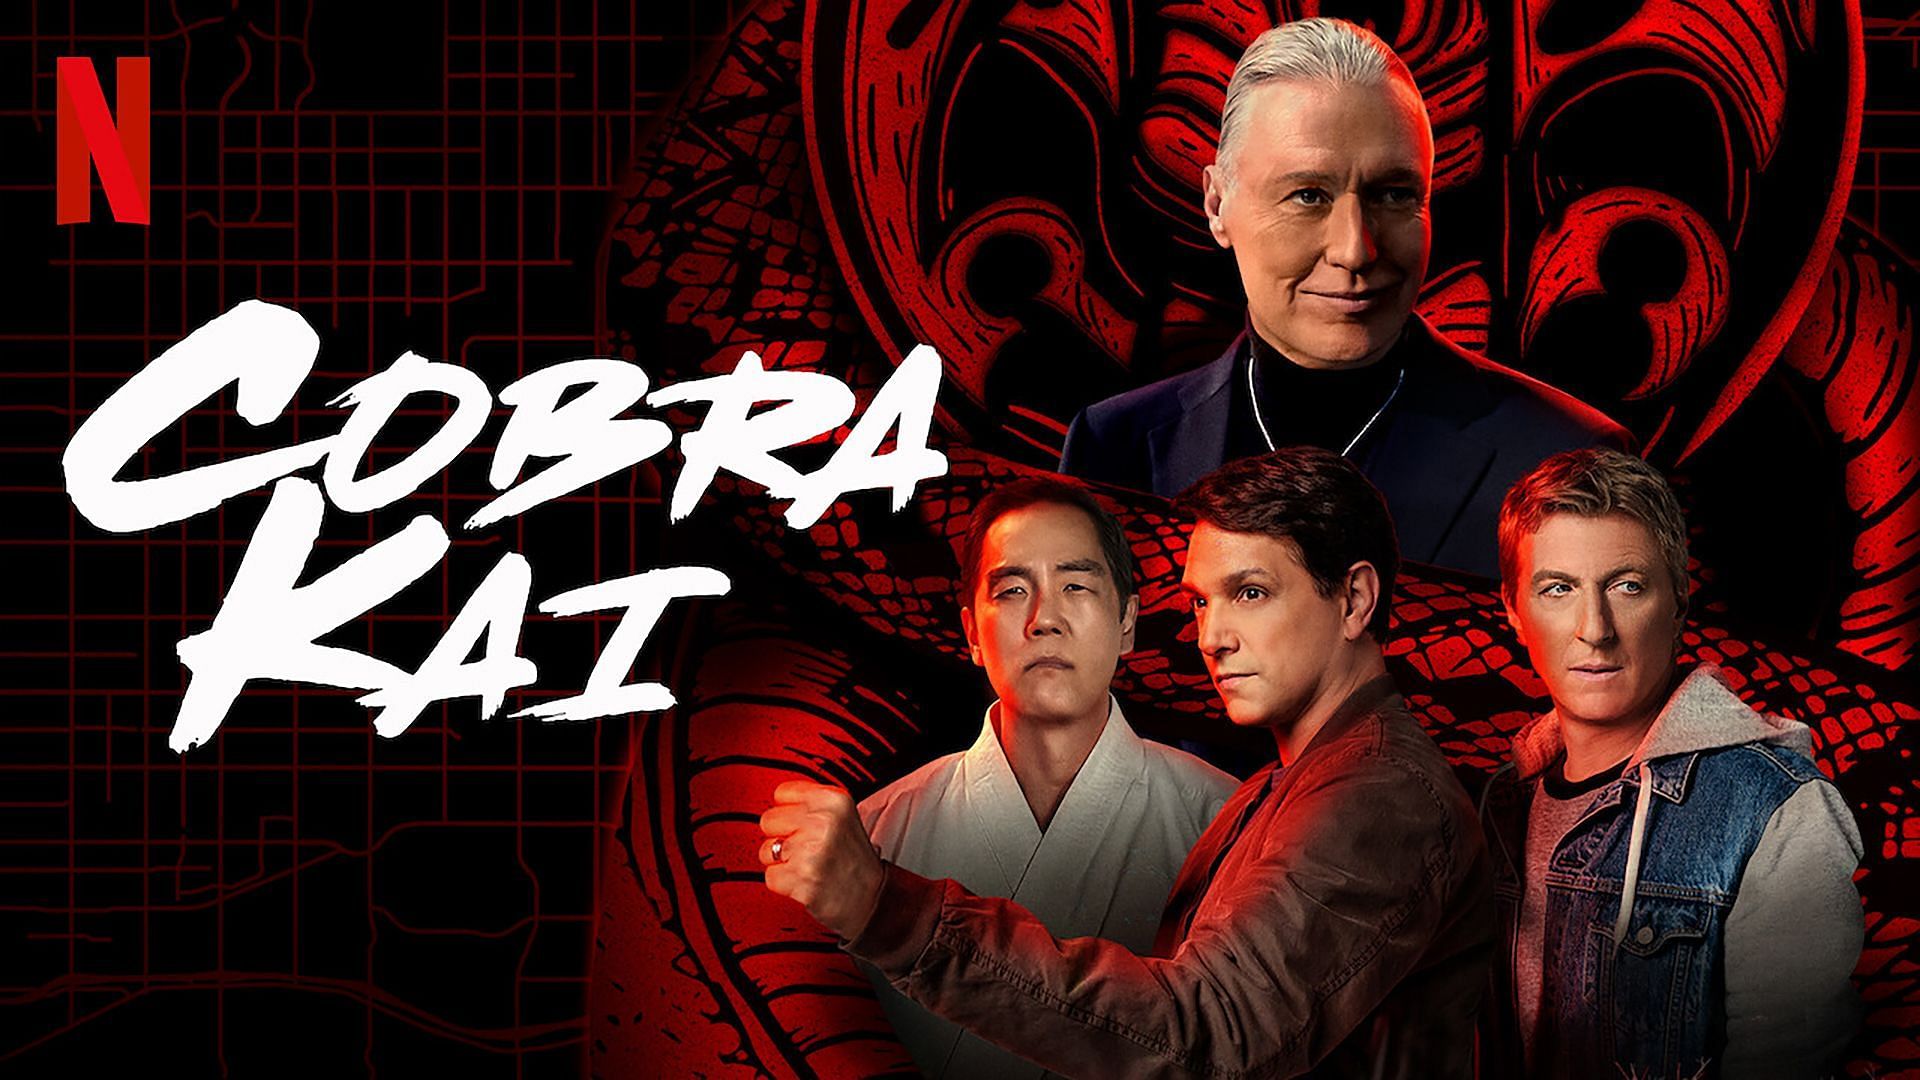 All popular dialogues from Cobra Kai (Image via Netflix)